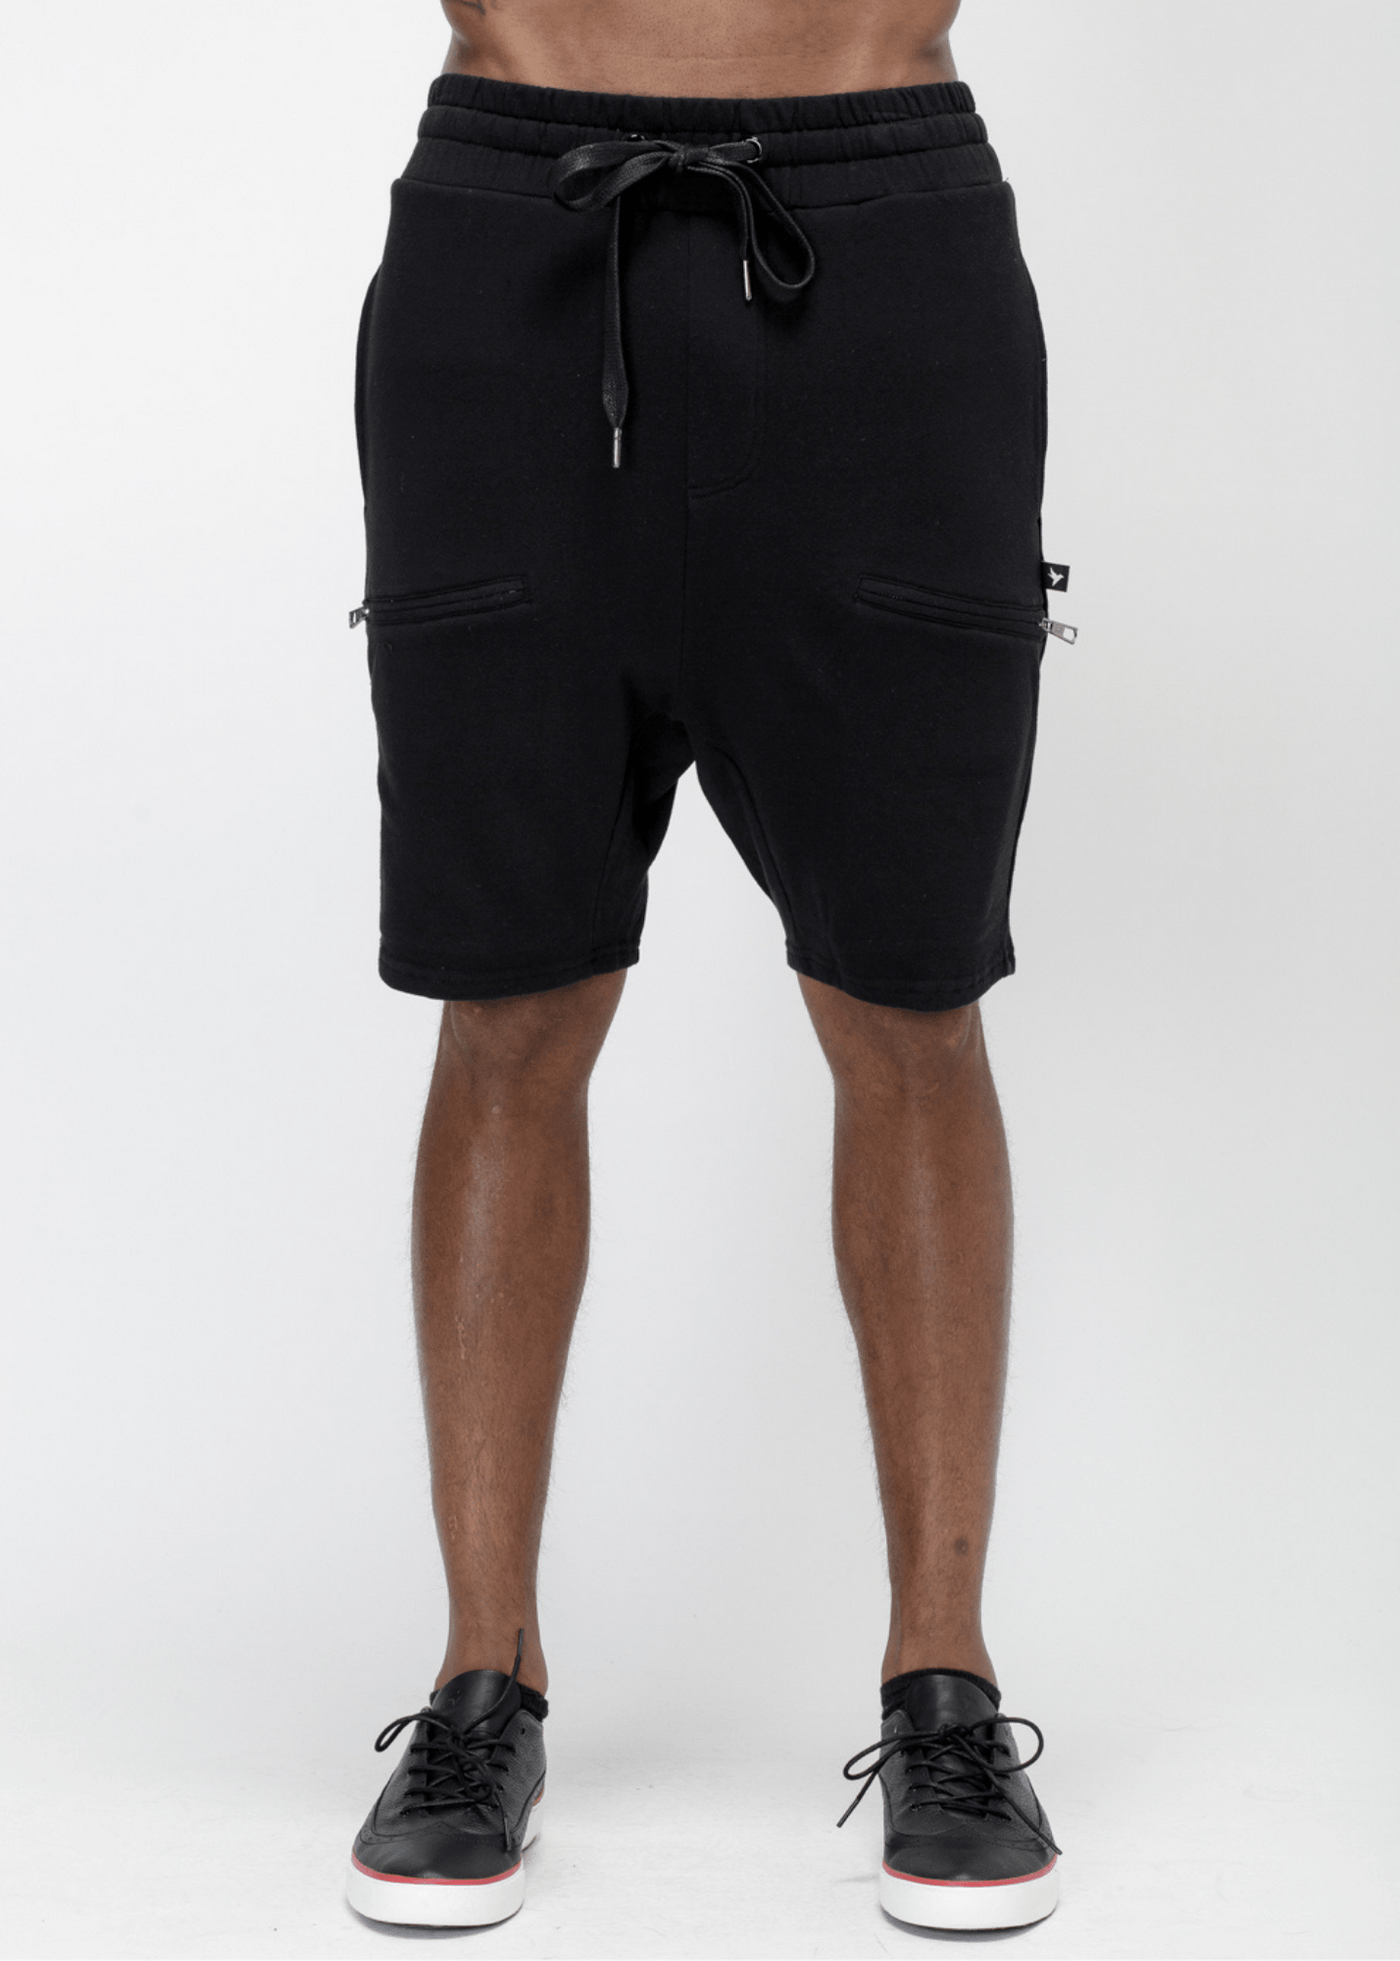 Konus Men's Side Zip Pocket Shorts in Black by Shop at Konus